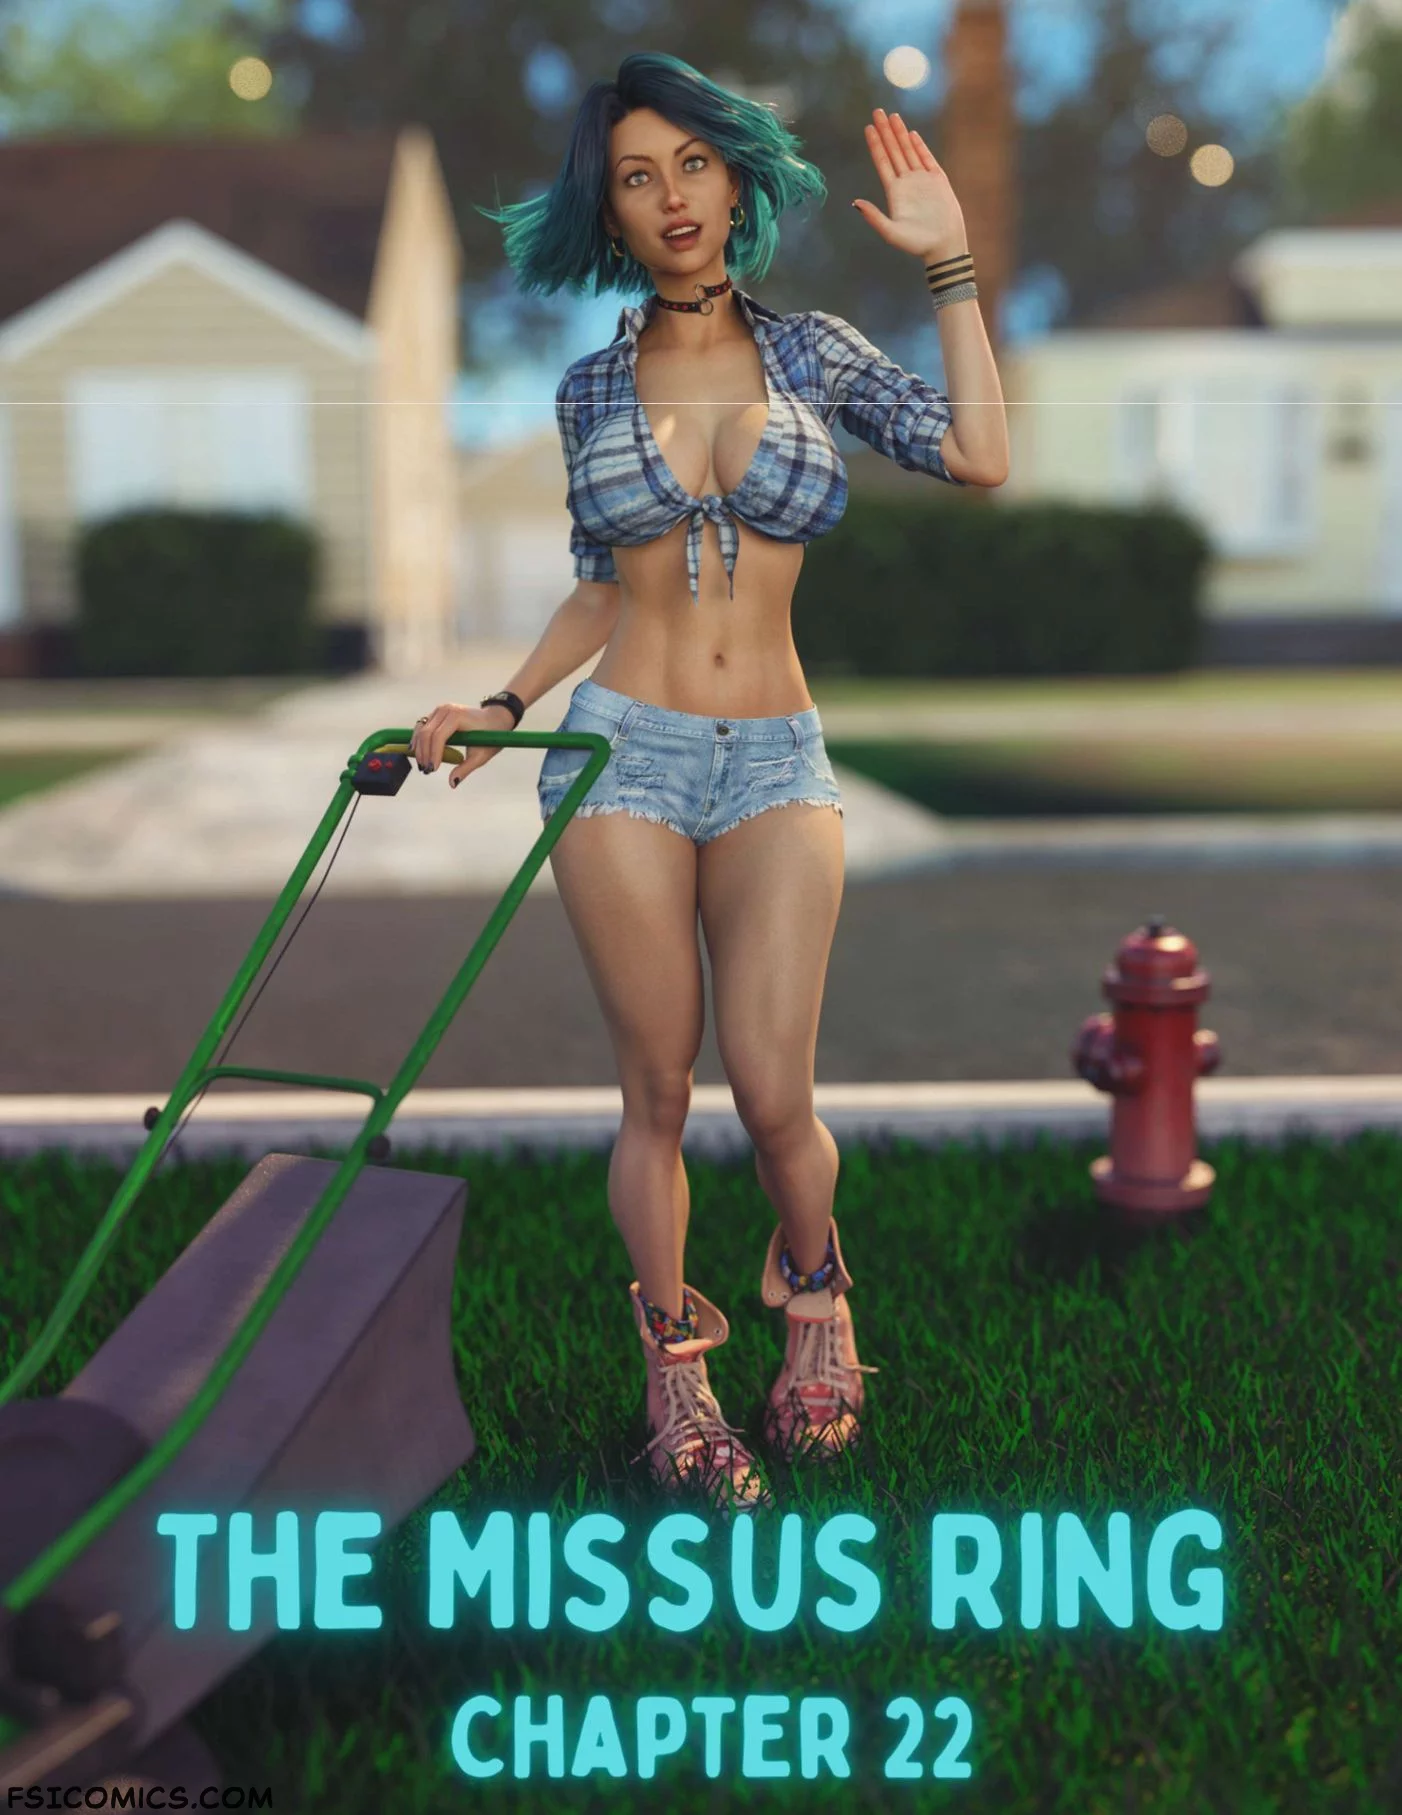 The Missus Ring Chapter 22 - Lexx228 | RawlyRawls - 145 - FSIComics